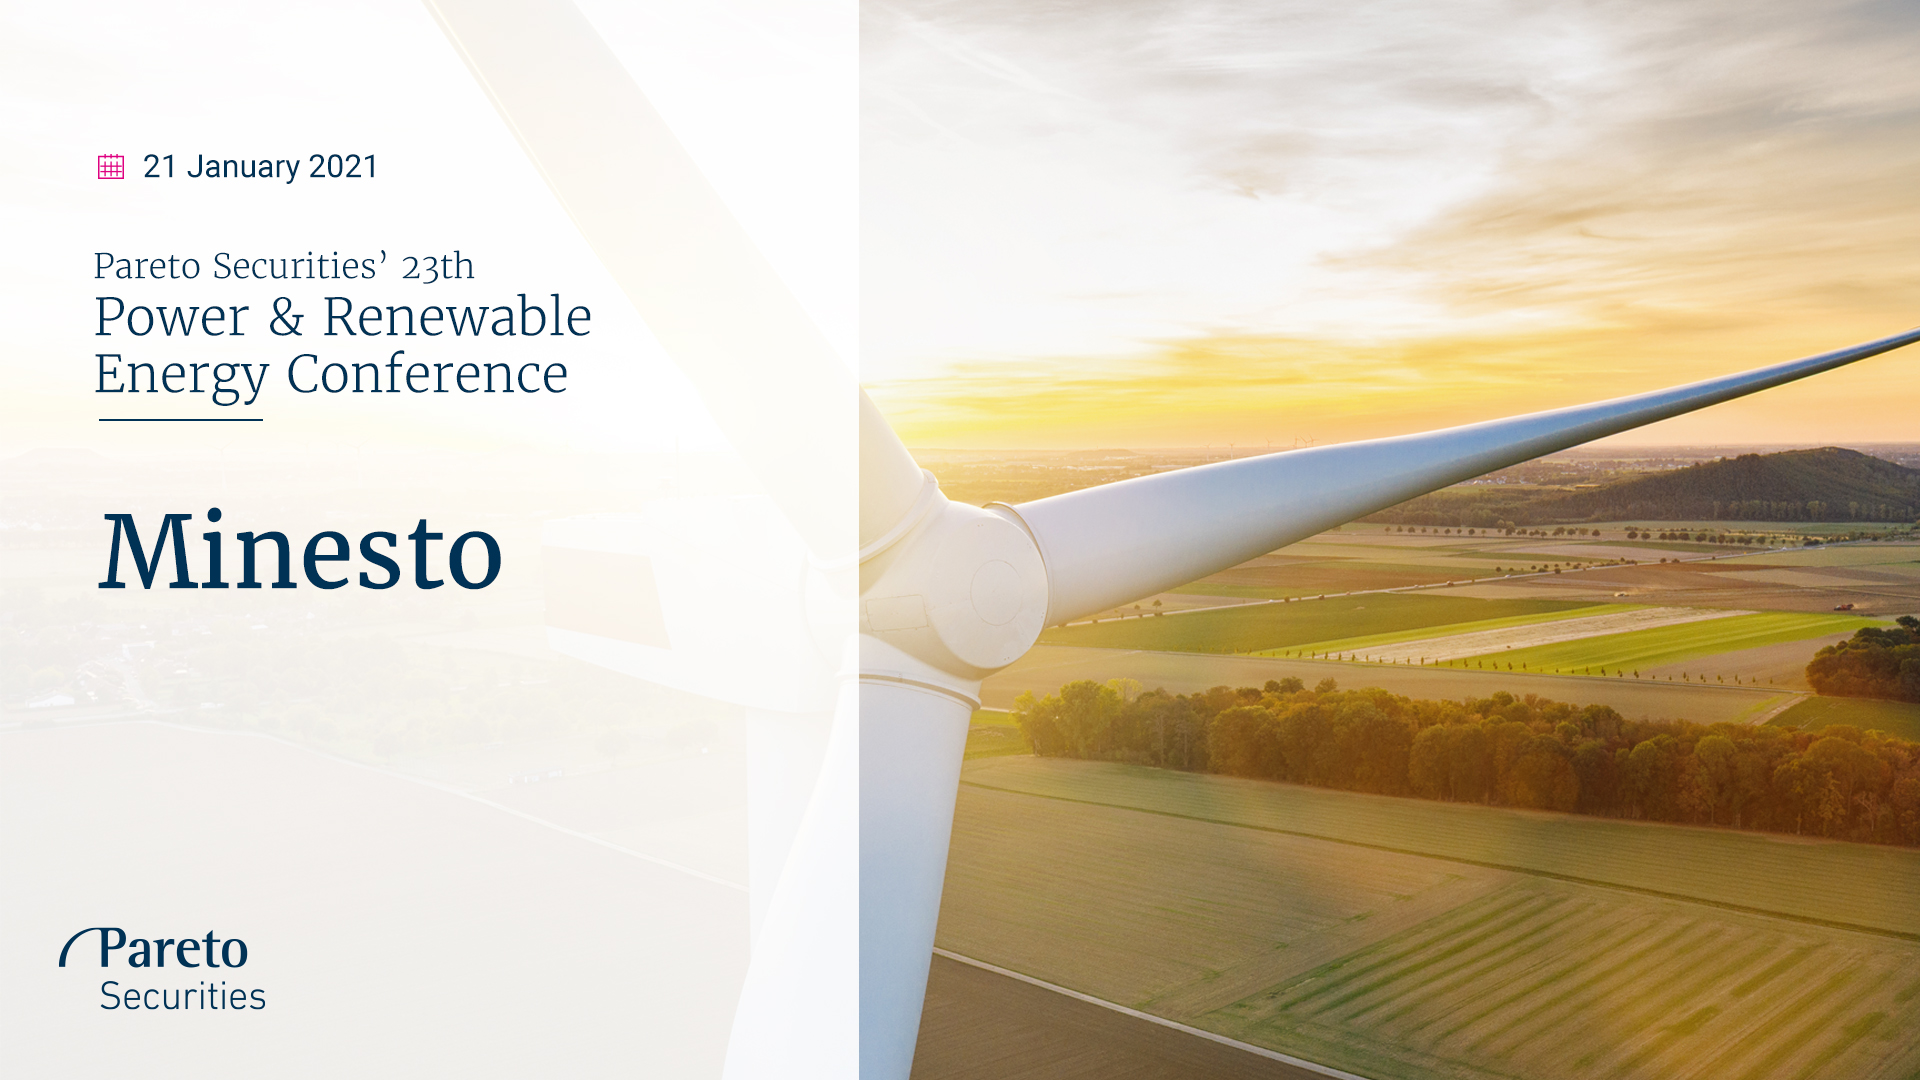 Minesto / Pareto Securities’ Power & Renewable Energy Conference